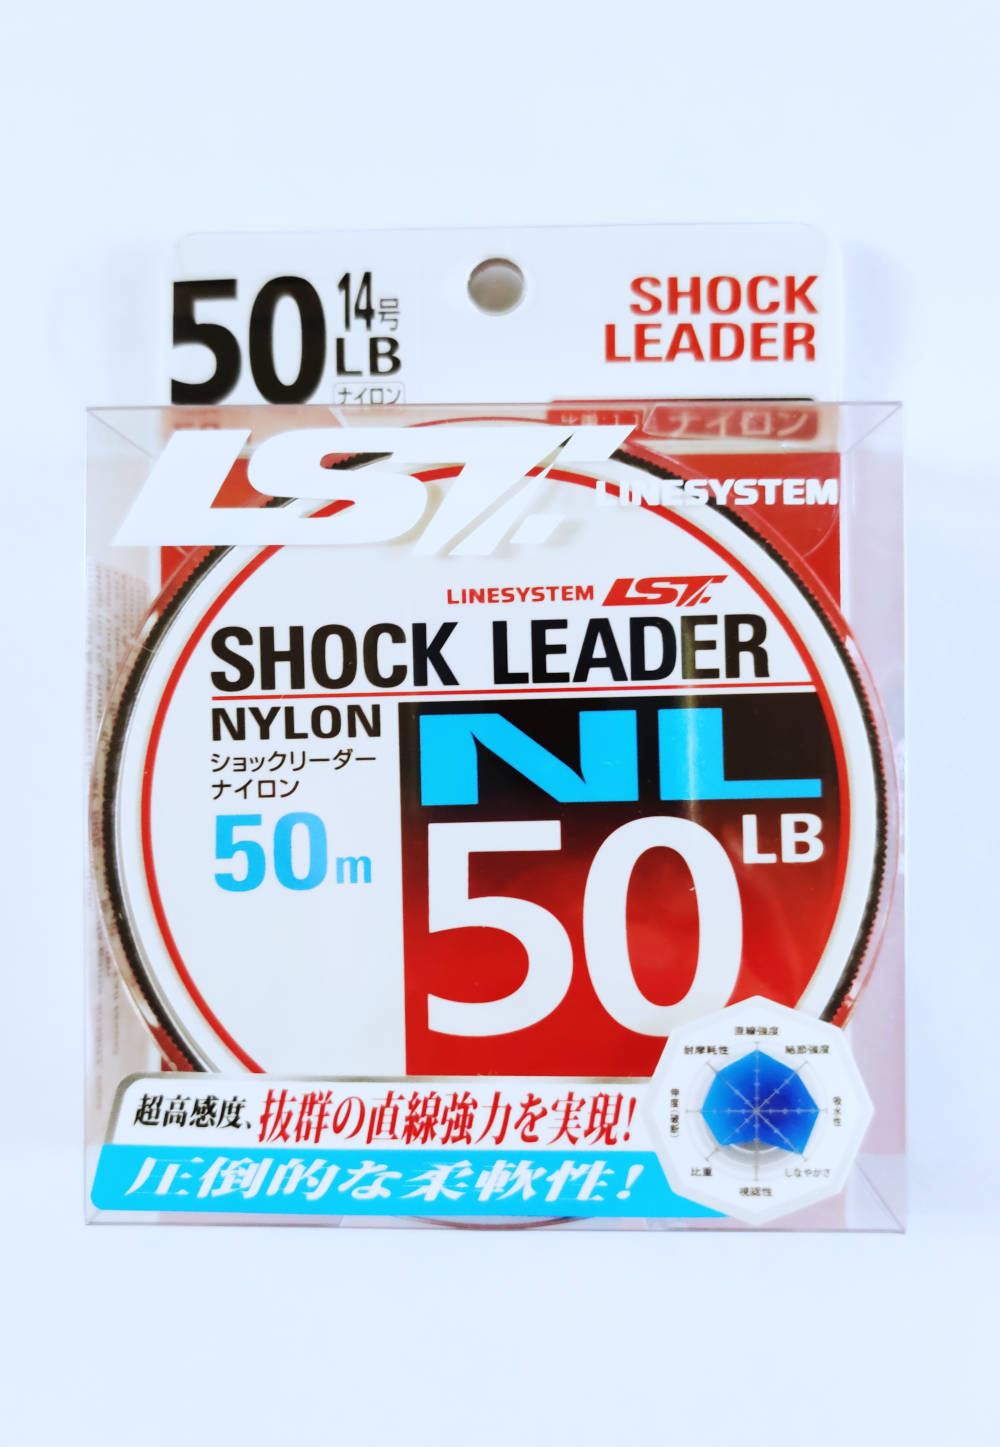 https://casaibrahim.com/wp-content/uploads/2021/09/Line-System-Nylon-Shock-Leader.jpg